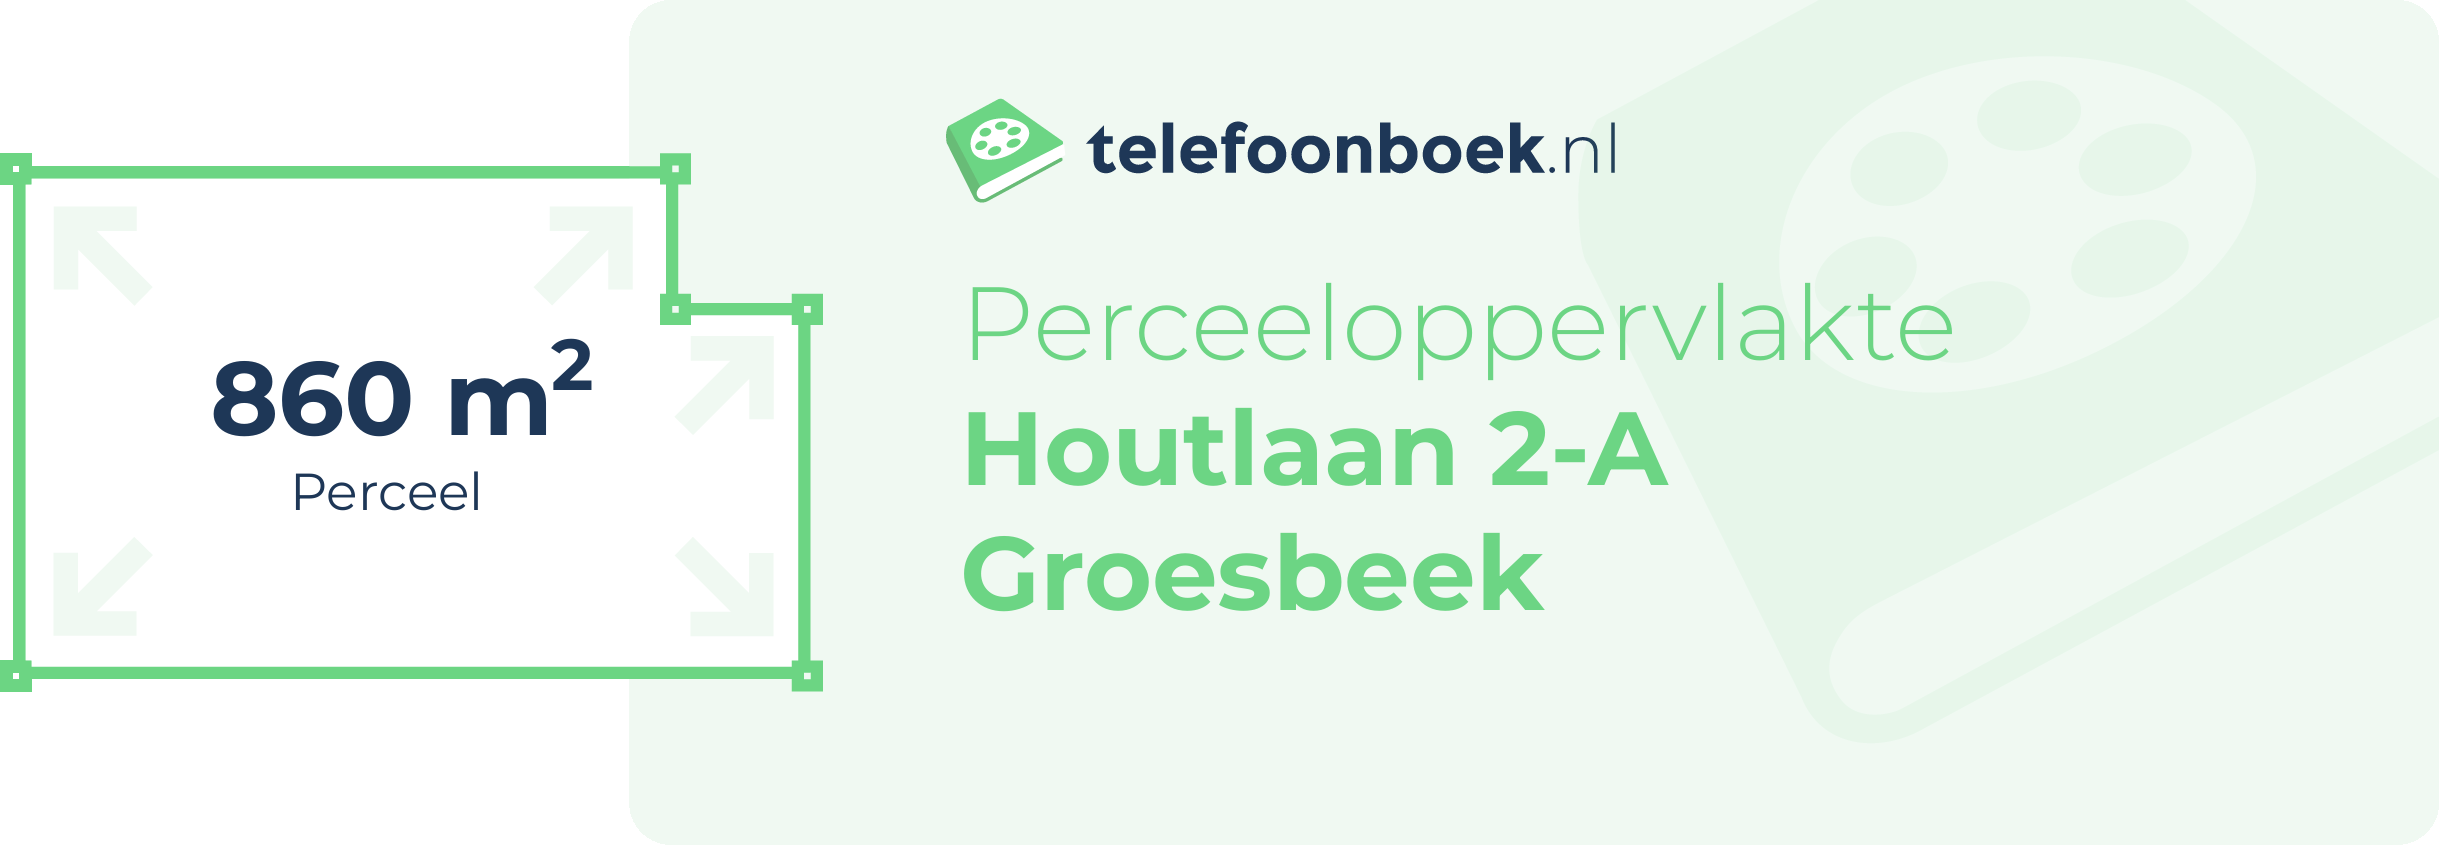 Perceeloppervlakte Houtlaan 2-A Groesbeek